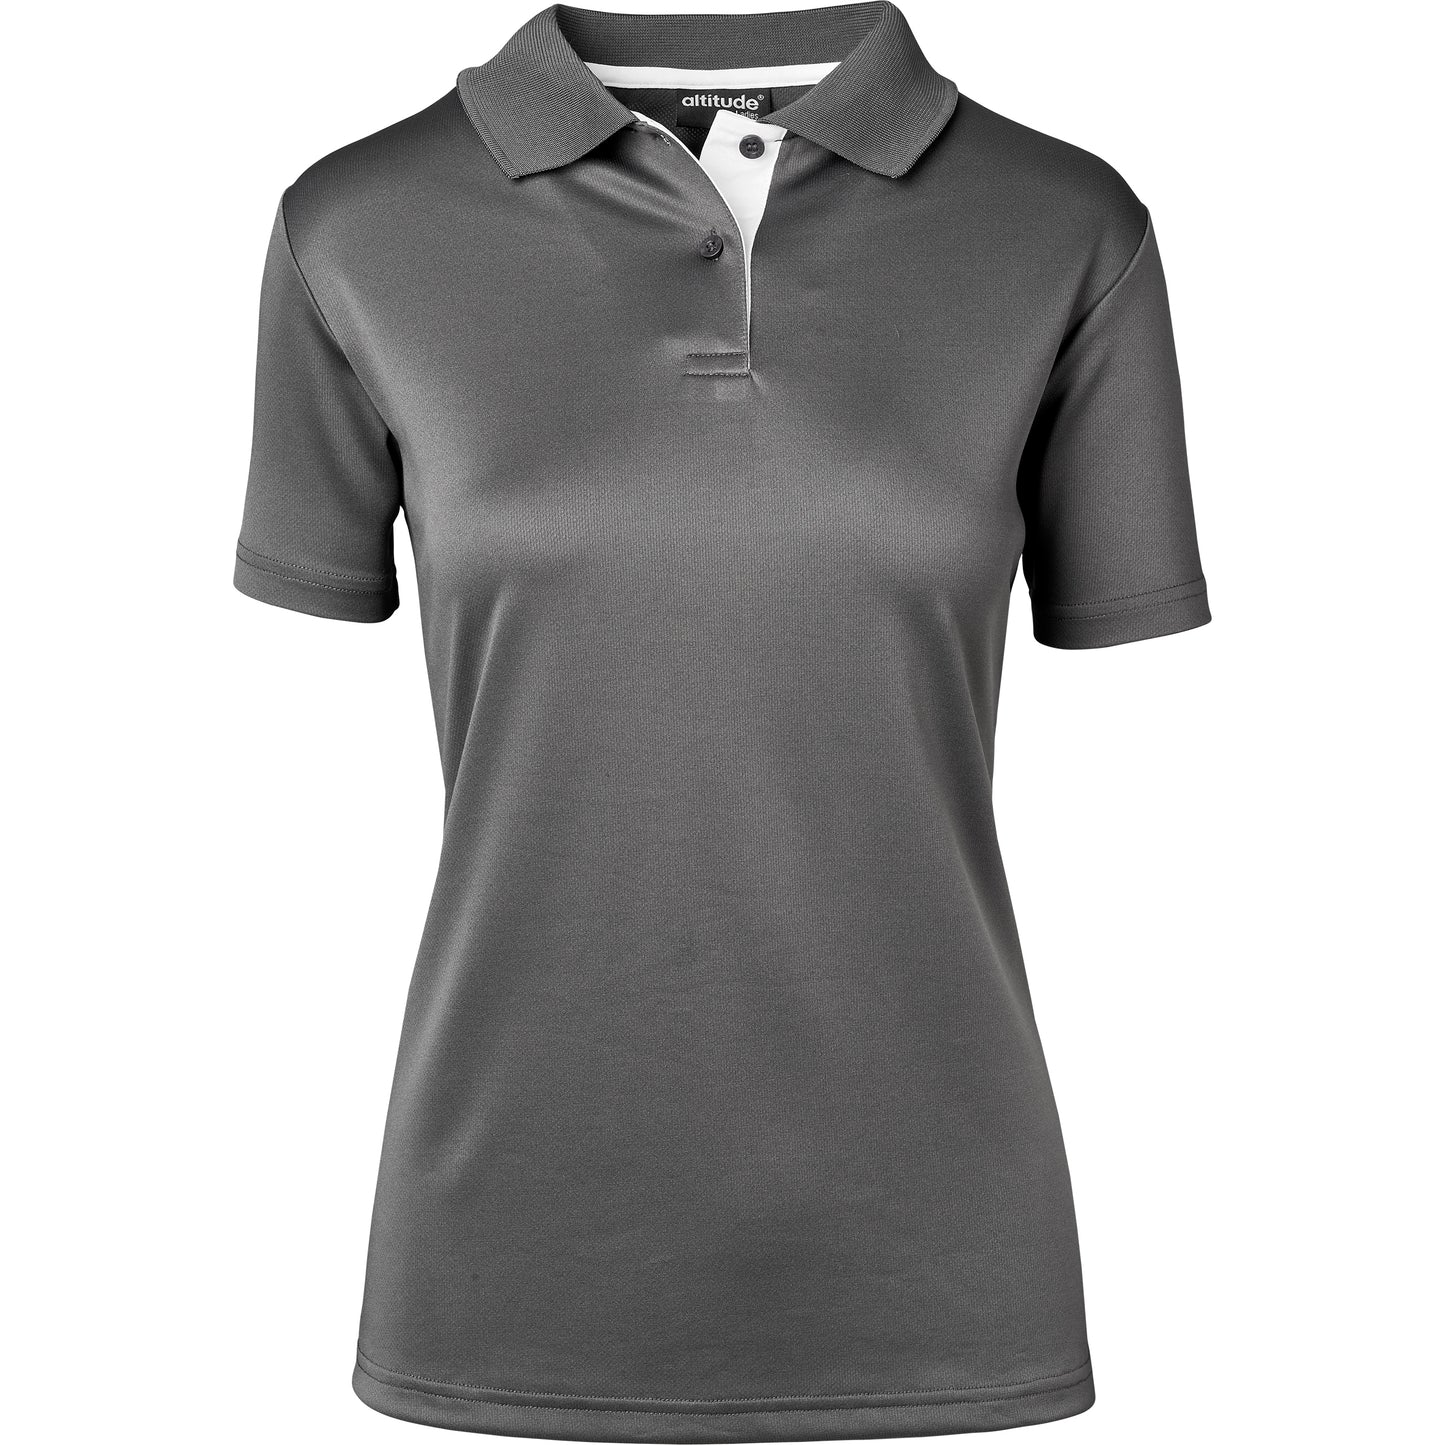 Ladies Tournament Golf Shirt Code: Code: ALT-TRL